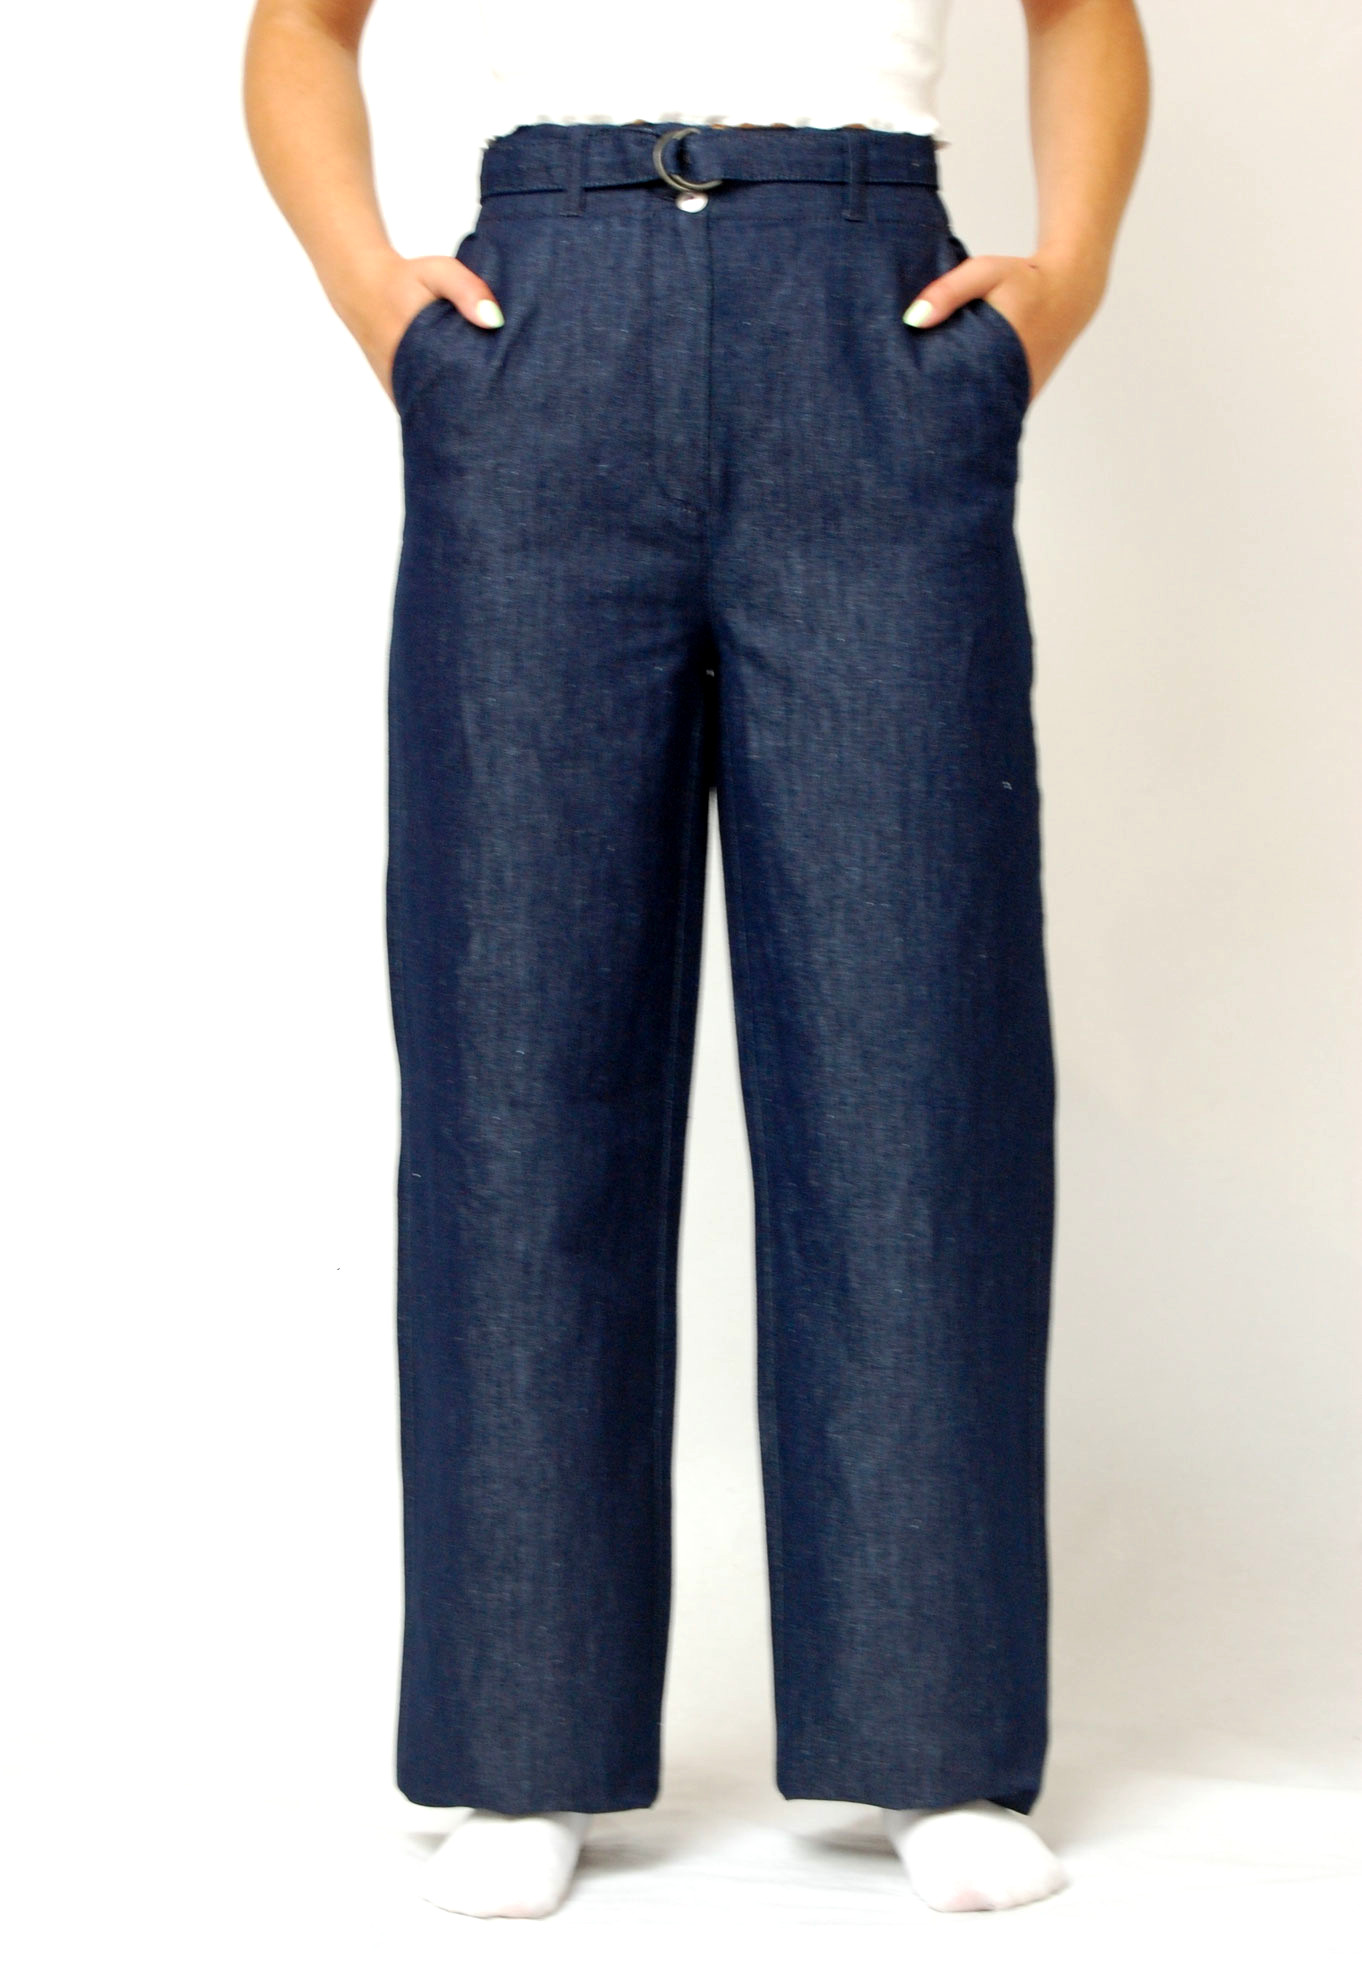 Blu navy 32 sconto 93% MODA UOMO Jeans NO STYLE Lee Pantaloncini jeans 